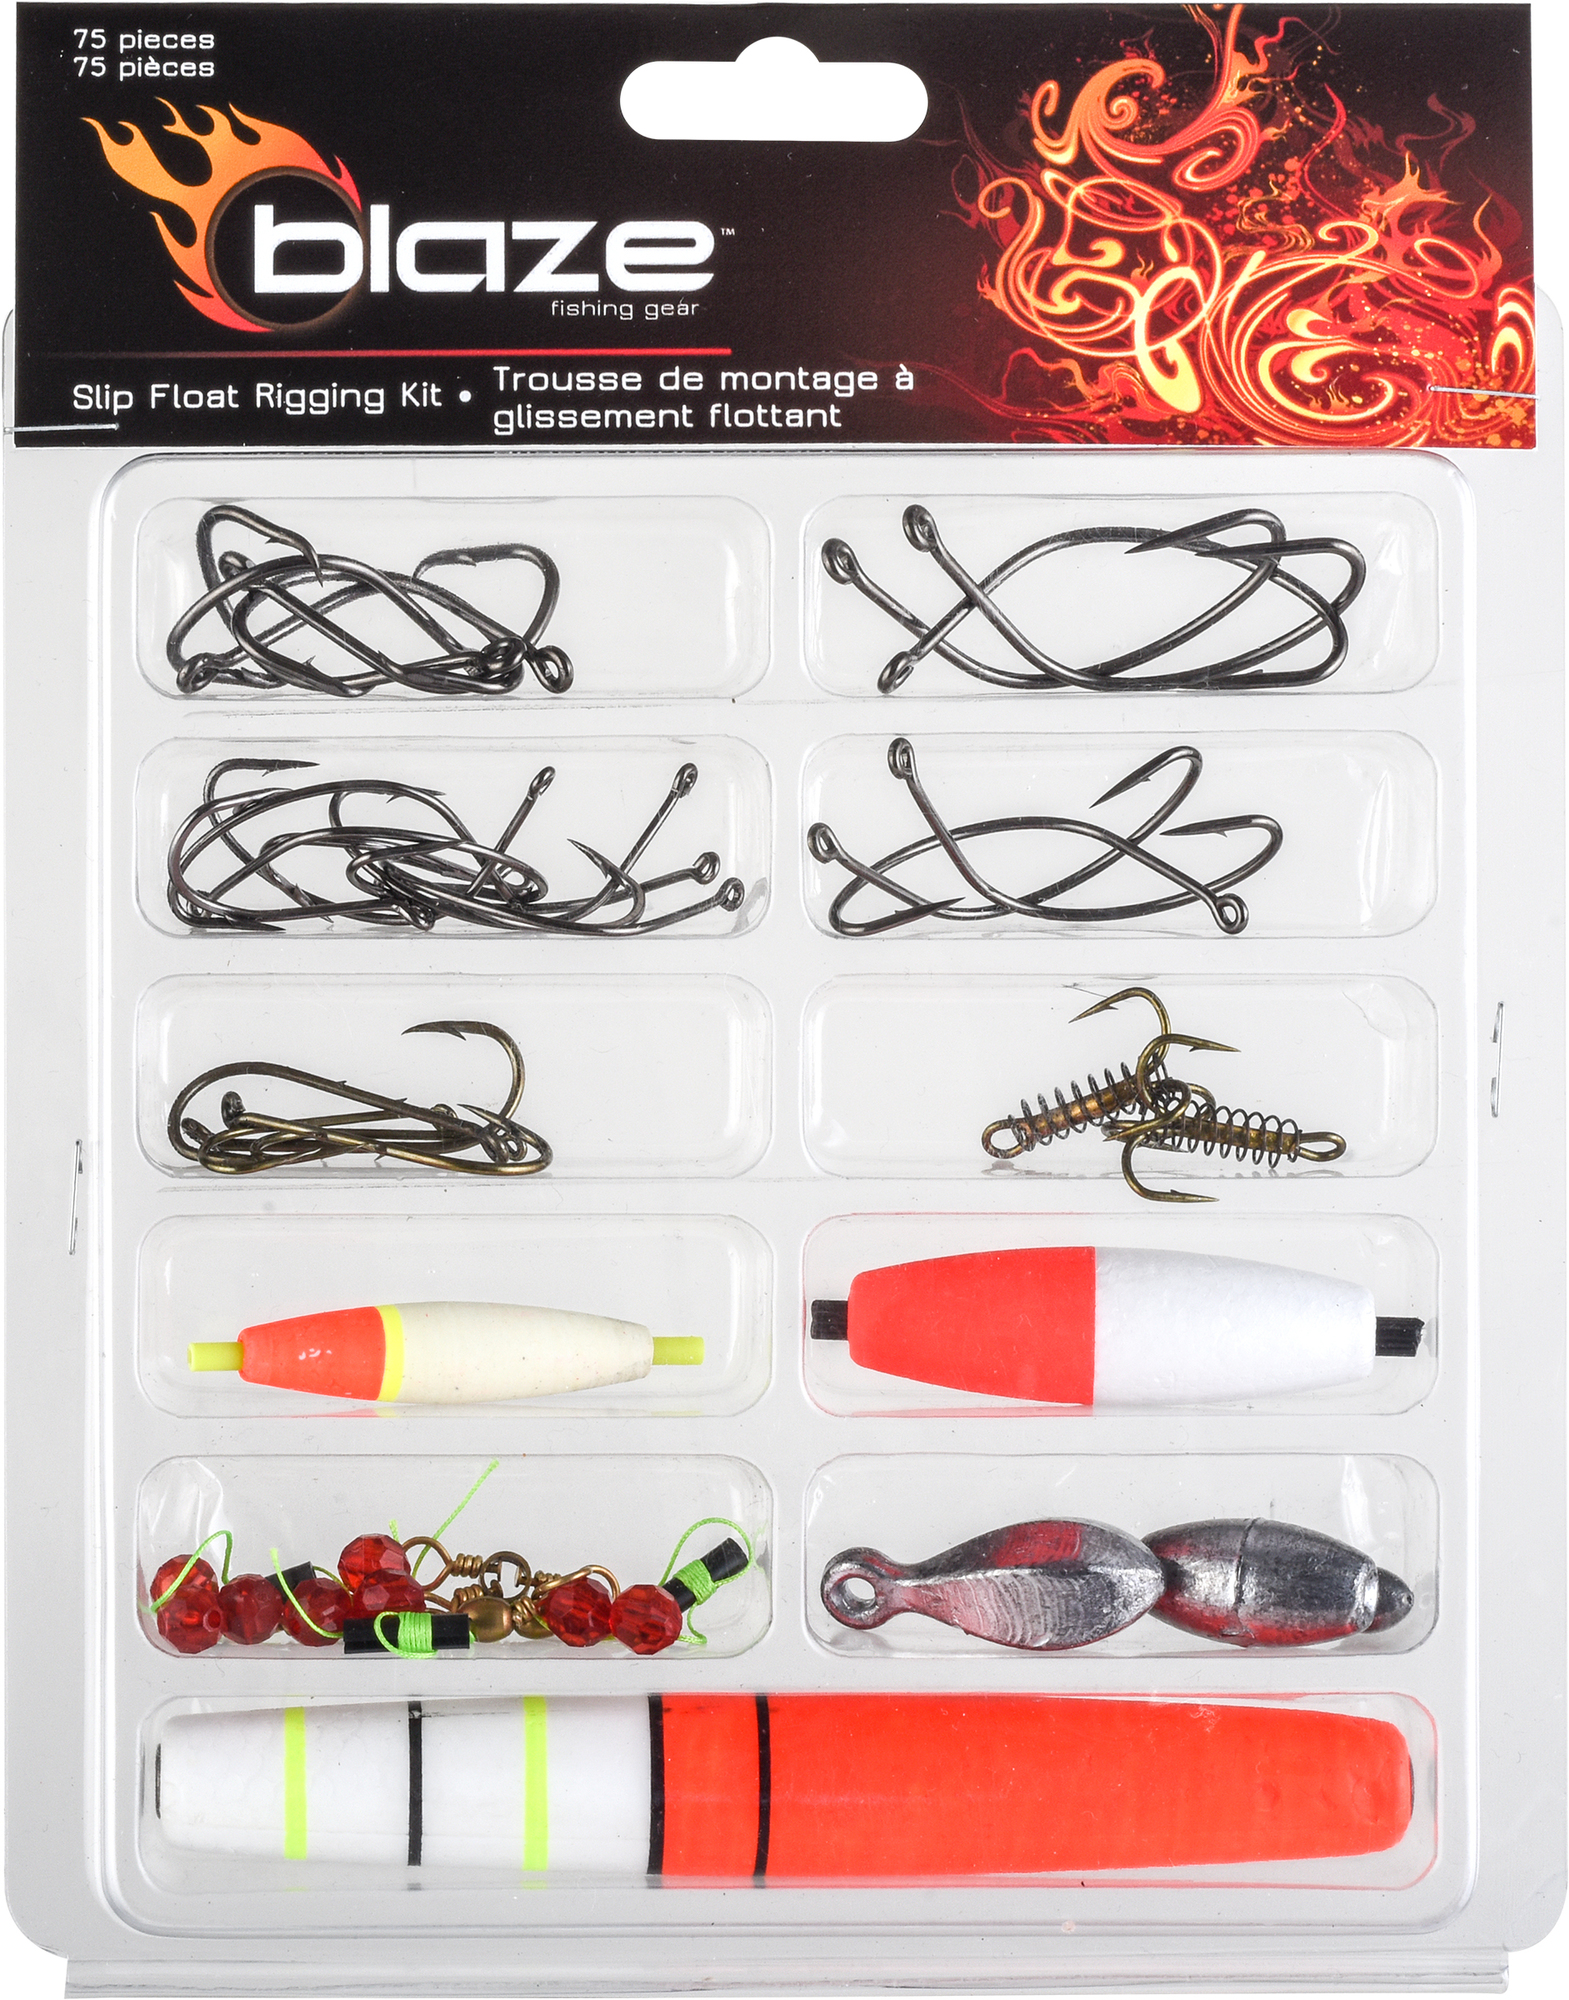 Blaze Fishing Gear Slip Float Rig Kit